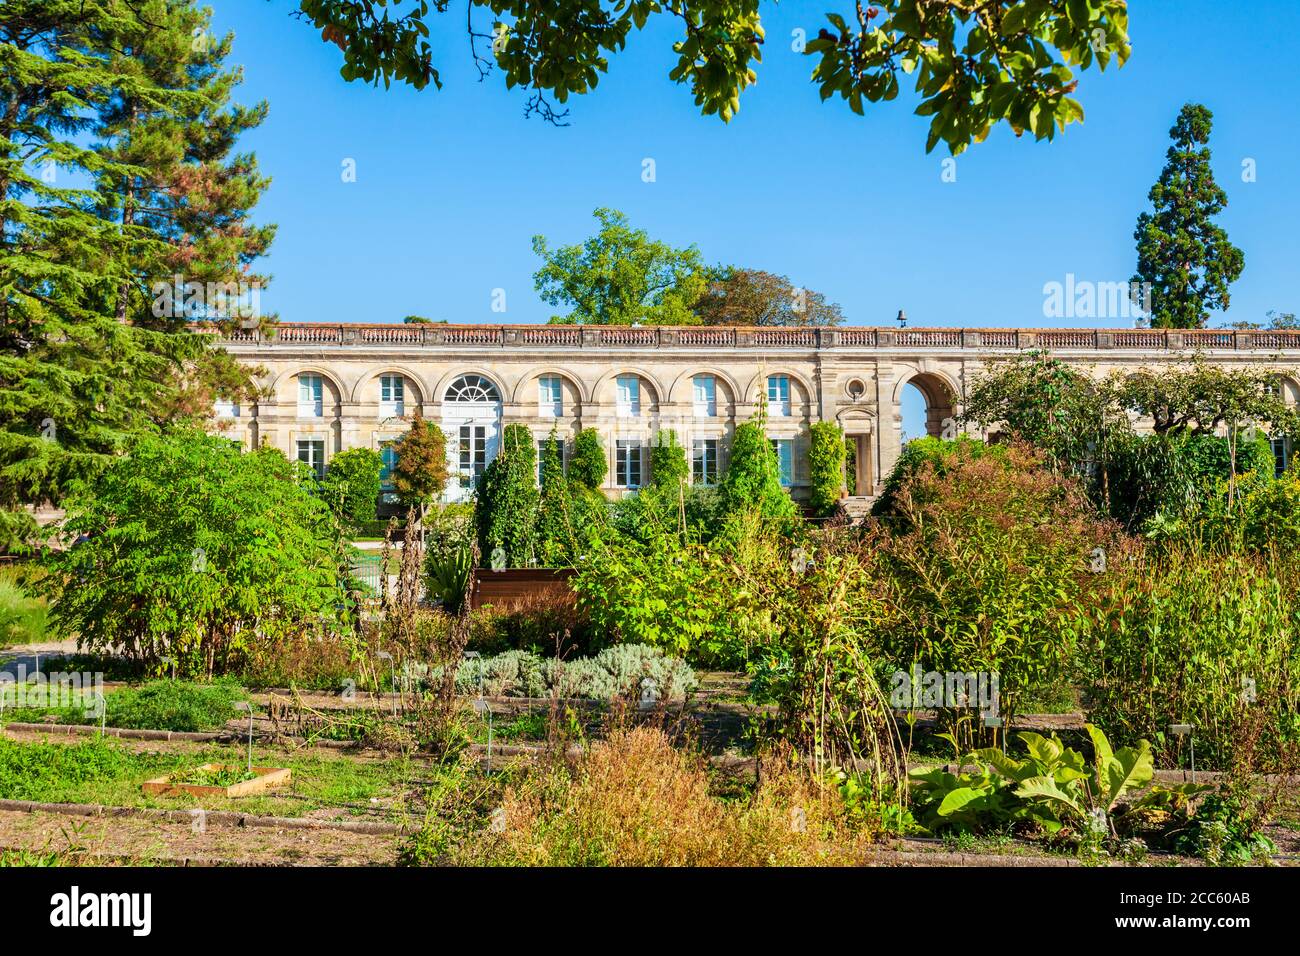 Bordeaux public garden or Jardin public de Bordeaux in France Stock Photo